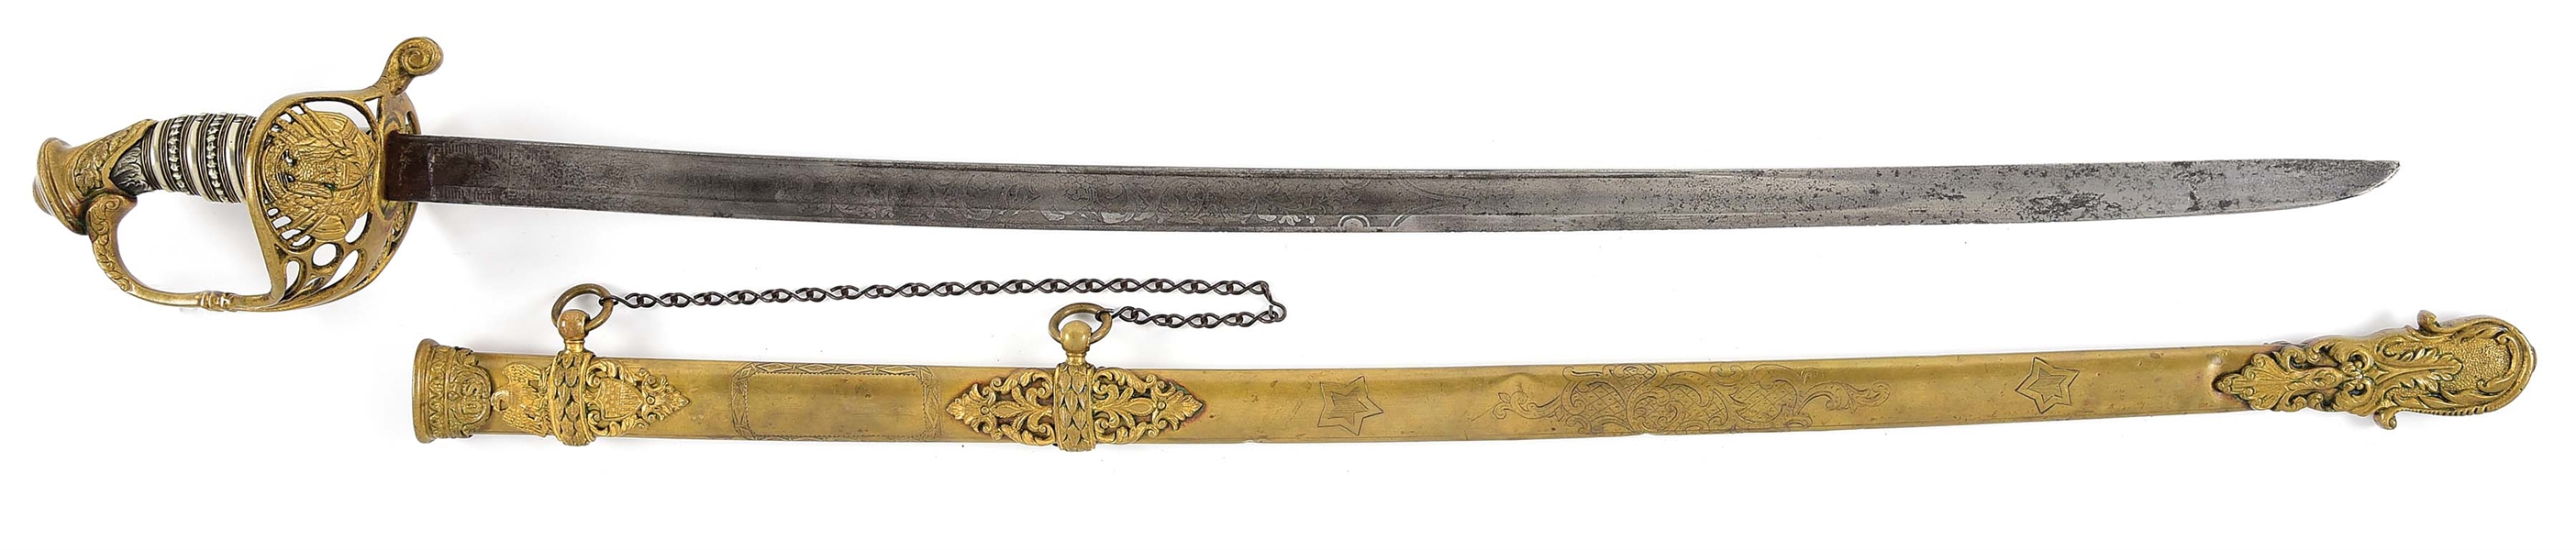 US EMERSON & SILVER COMBINATION FRENCH HILT NON-REGULATION MODEL OF 1847 PRESENTATION GRADE SWORD.